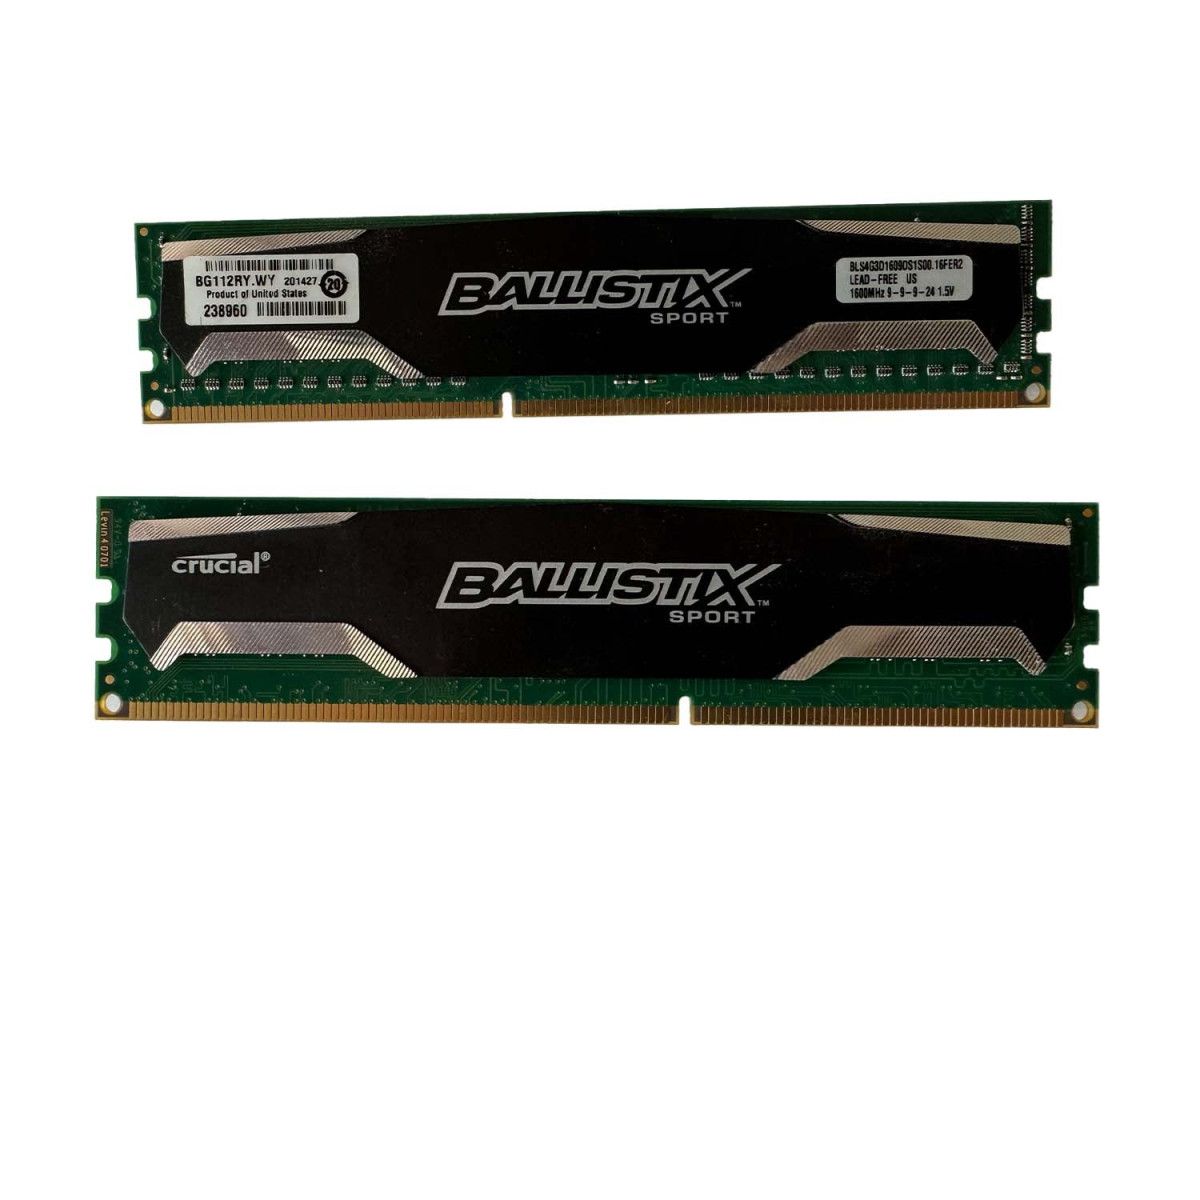 2x 4GB pamięci DDR3-1600 do gier- Memstar